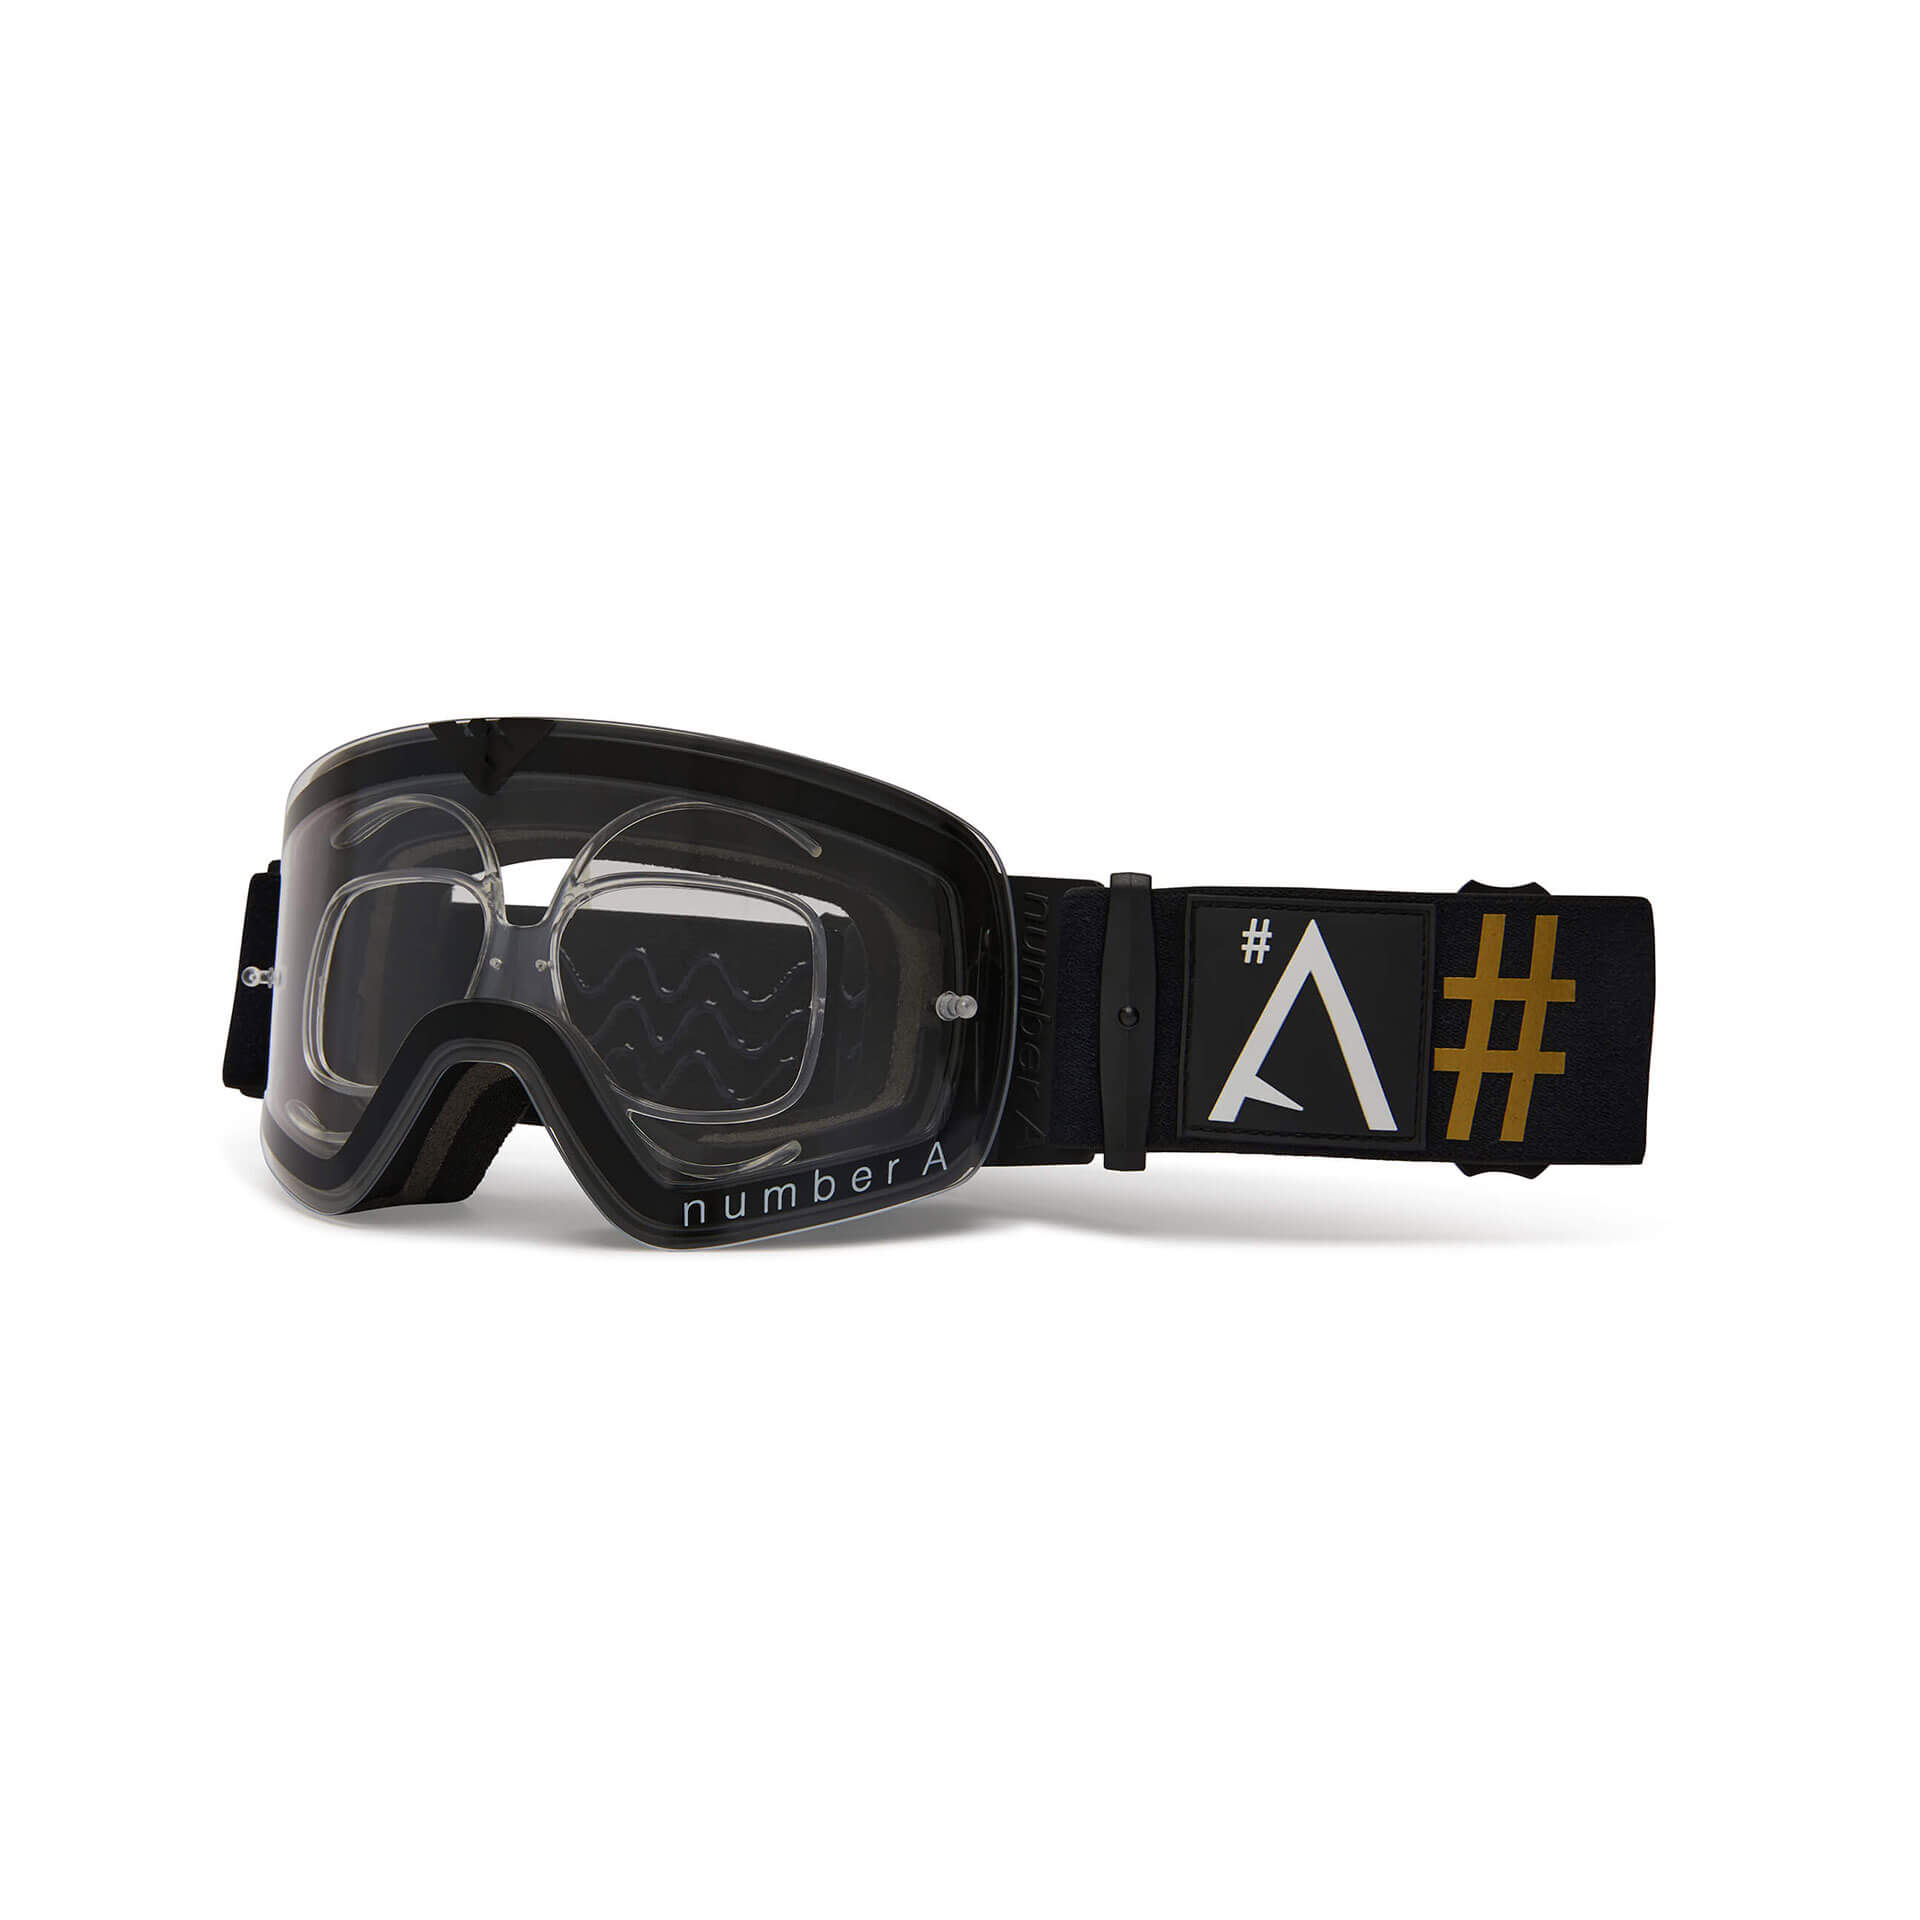 Number A Stato Goggles clear lens black &amp; gold strap myopia accessory cycling eyewear mtb biking goggles